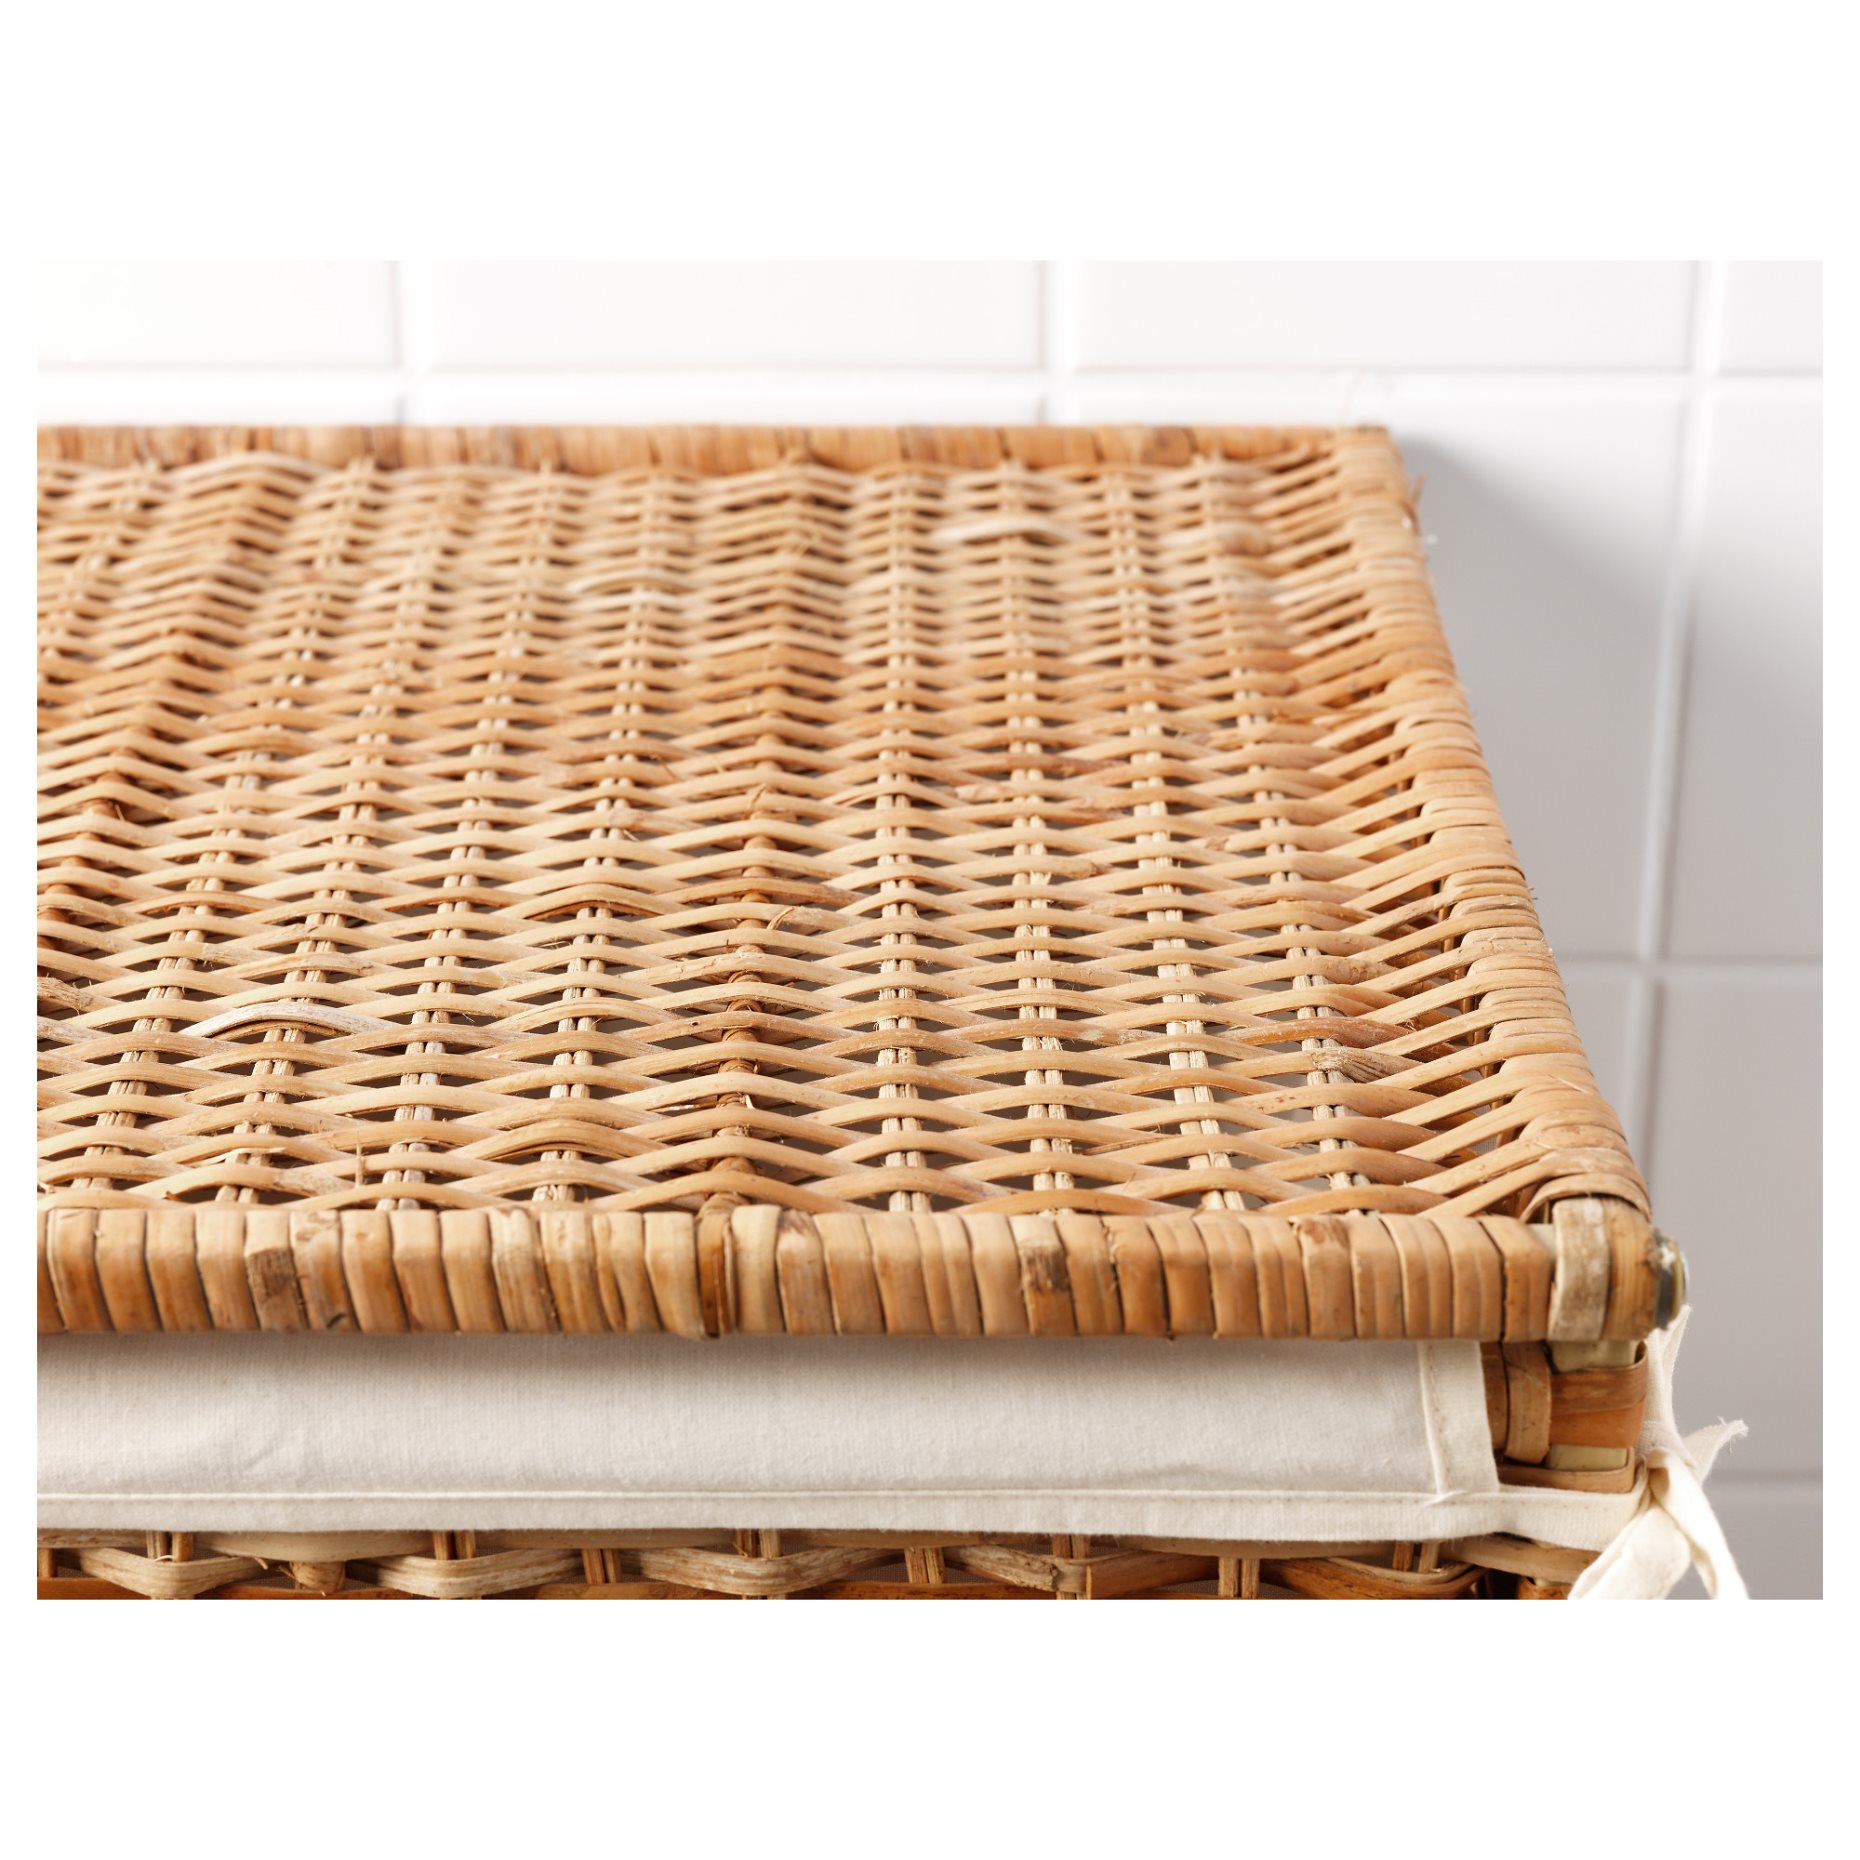 BRANÄS, laundry basket with lining, 202.147.31